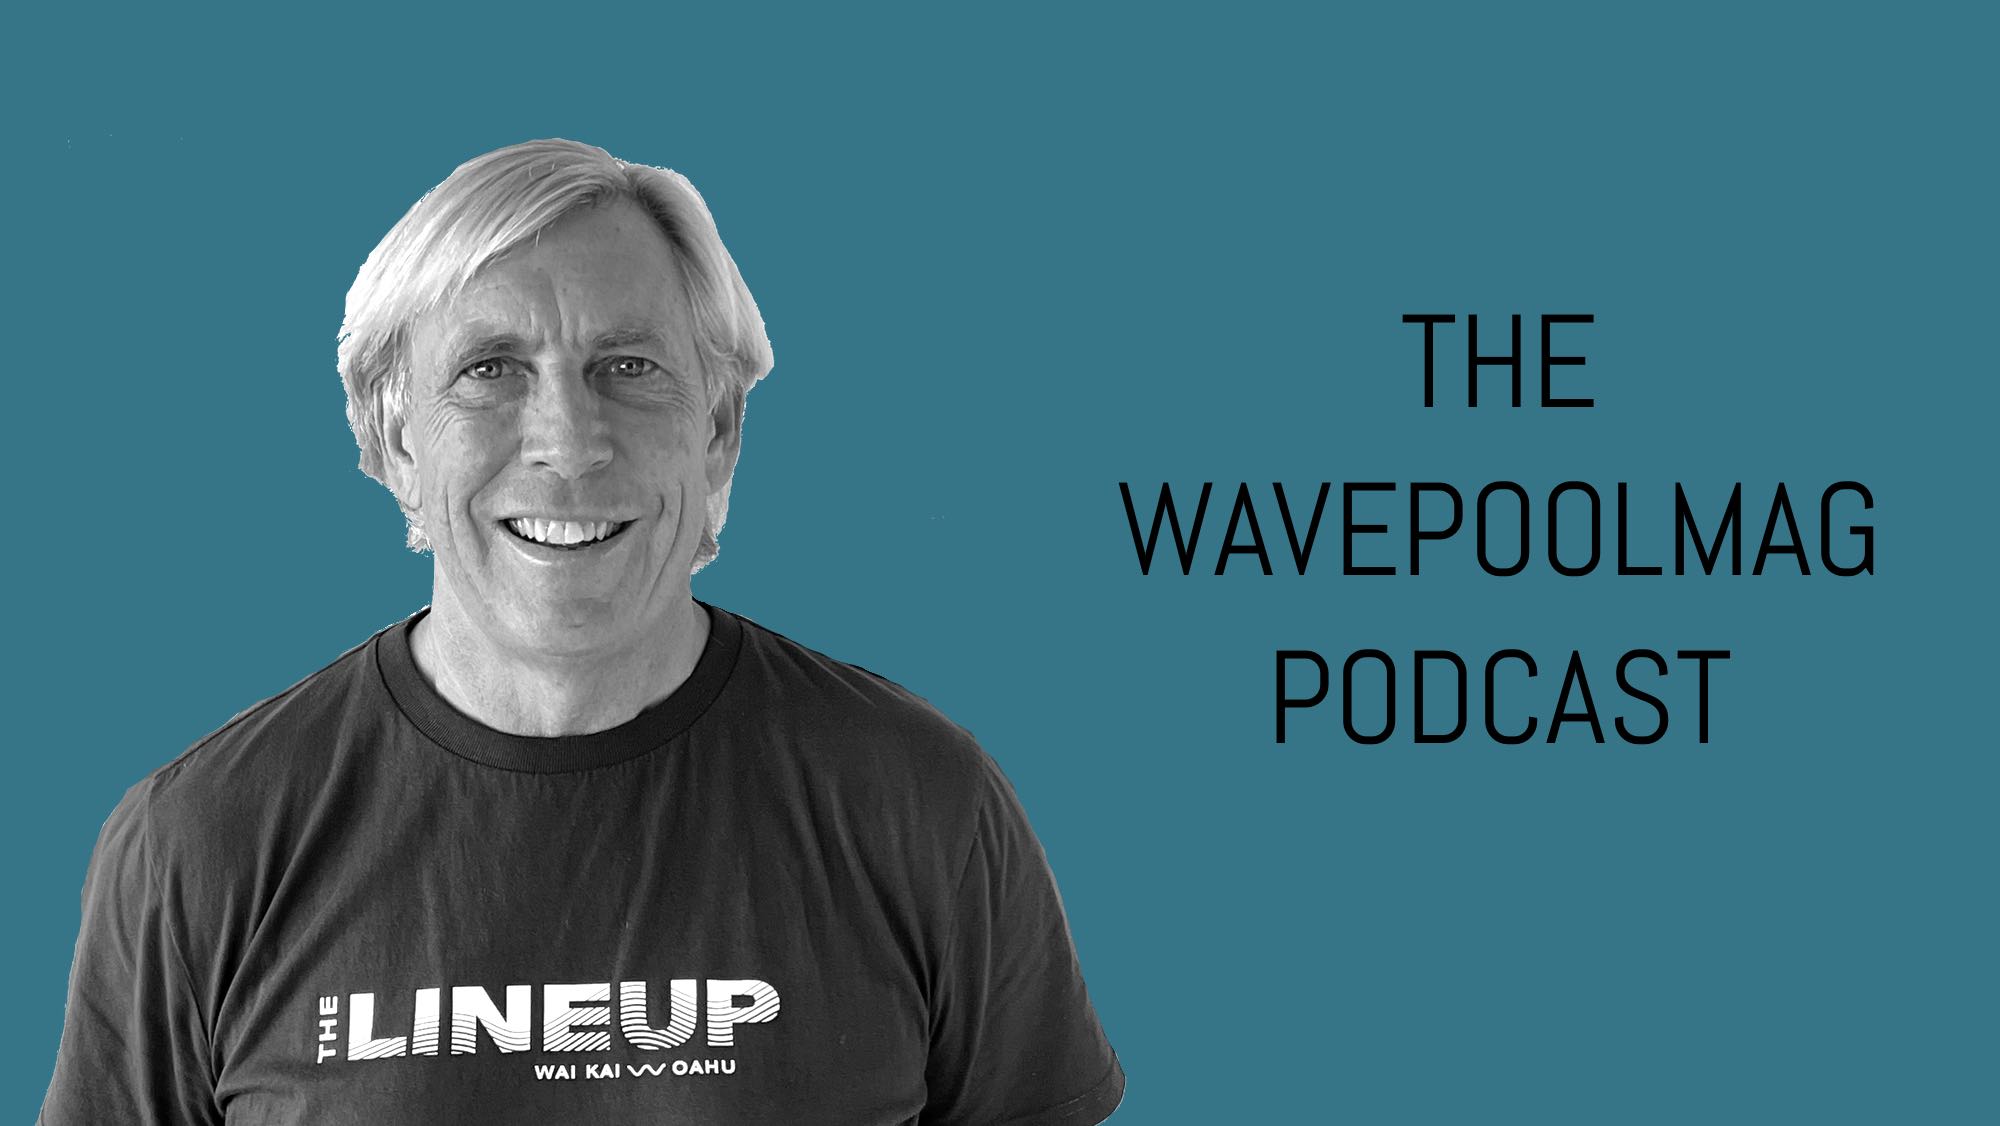 skip taylor on the wavepoolmag podcast